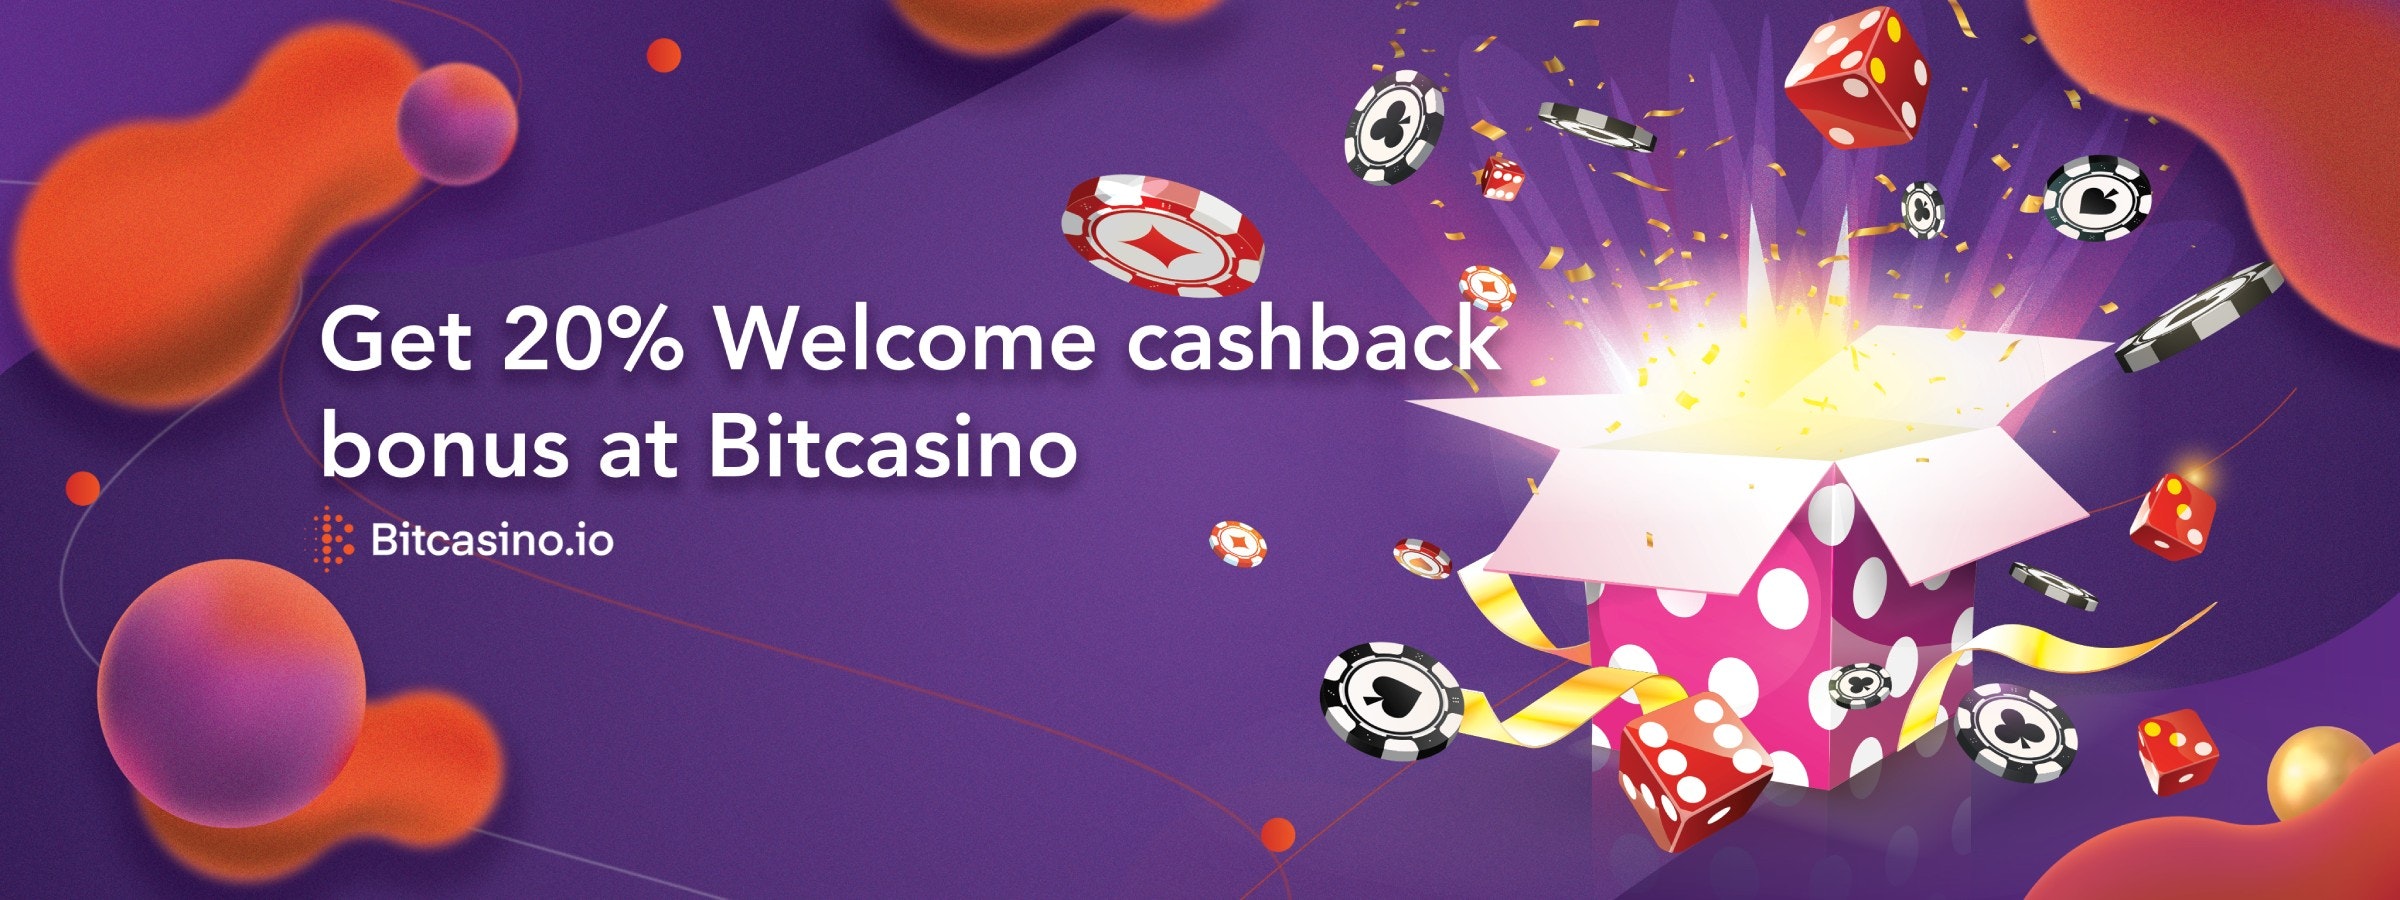 Get 20% Welcome cashback bonus at Bitcasino - Blog